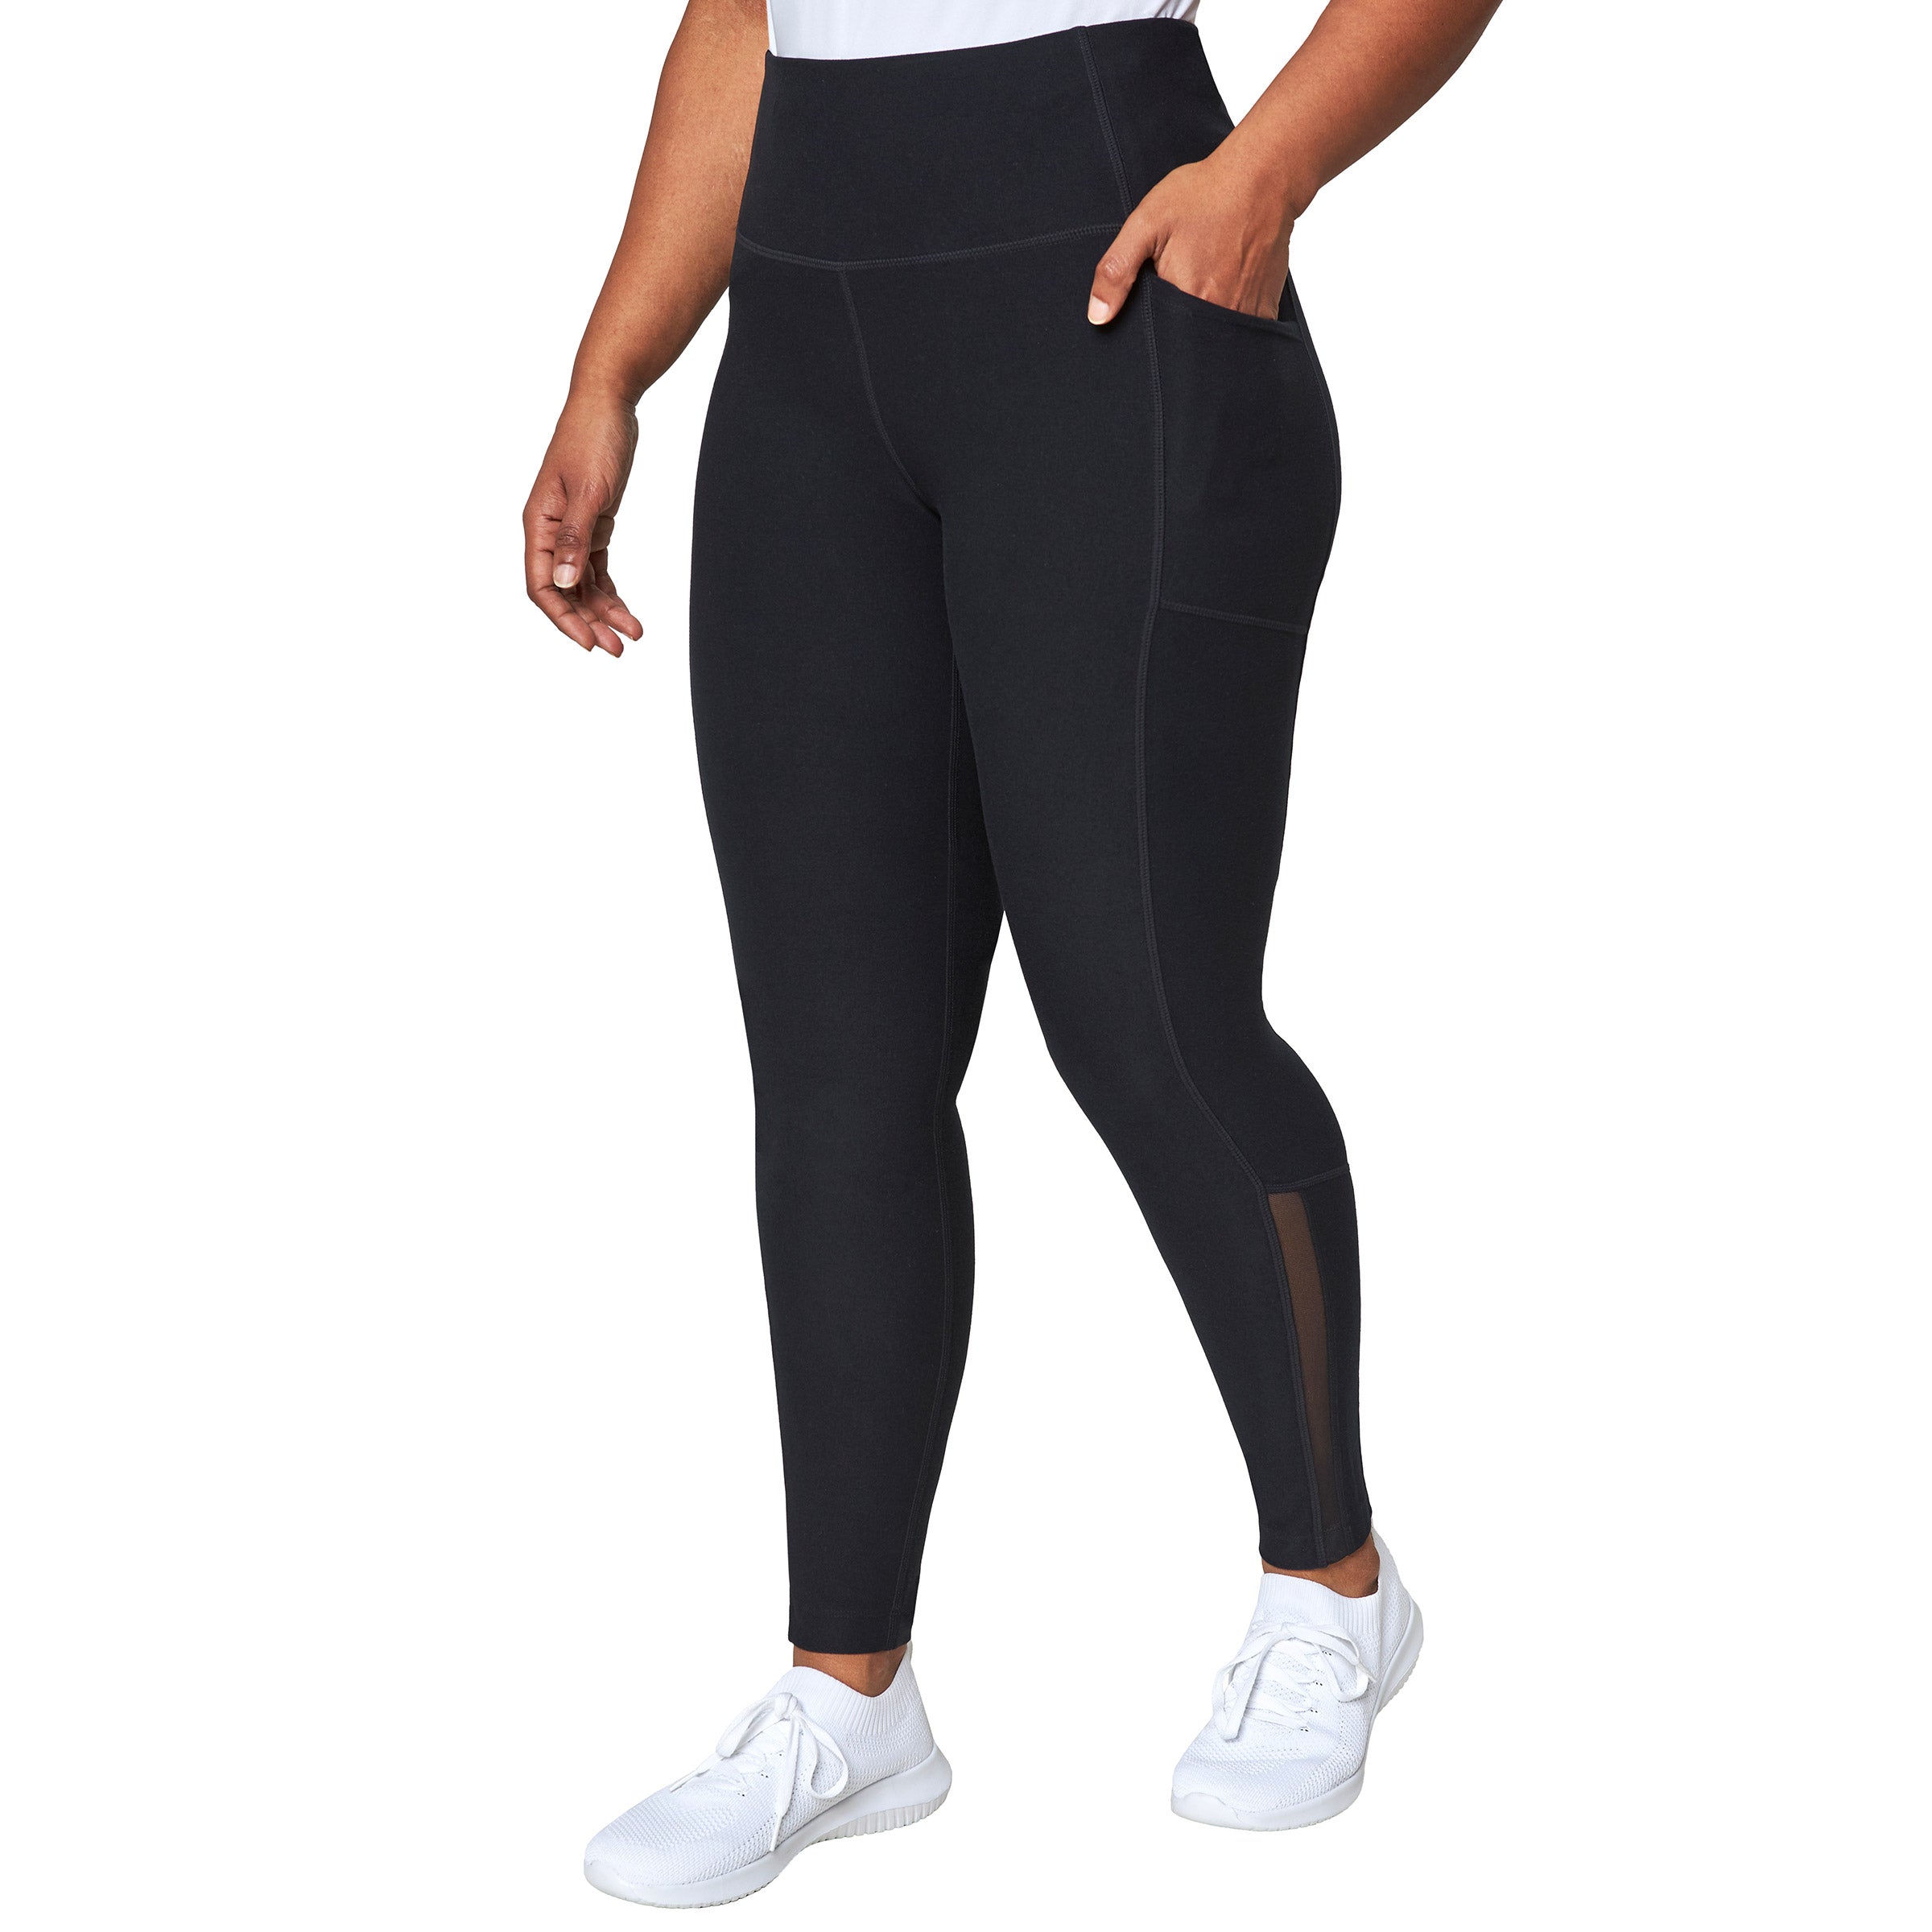 Mondetta Women's Workout Leggings with Small Back Zip Pocket